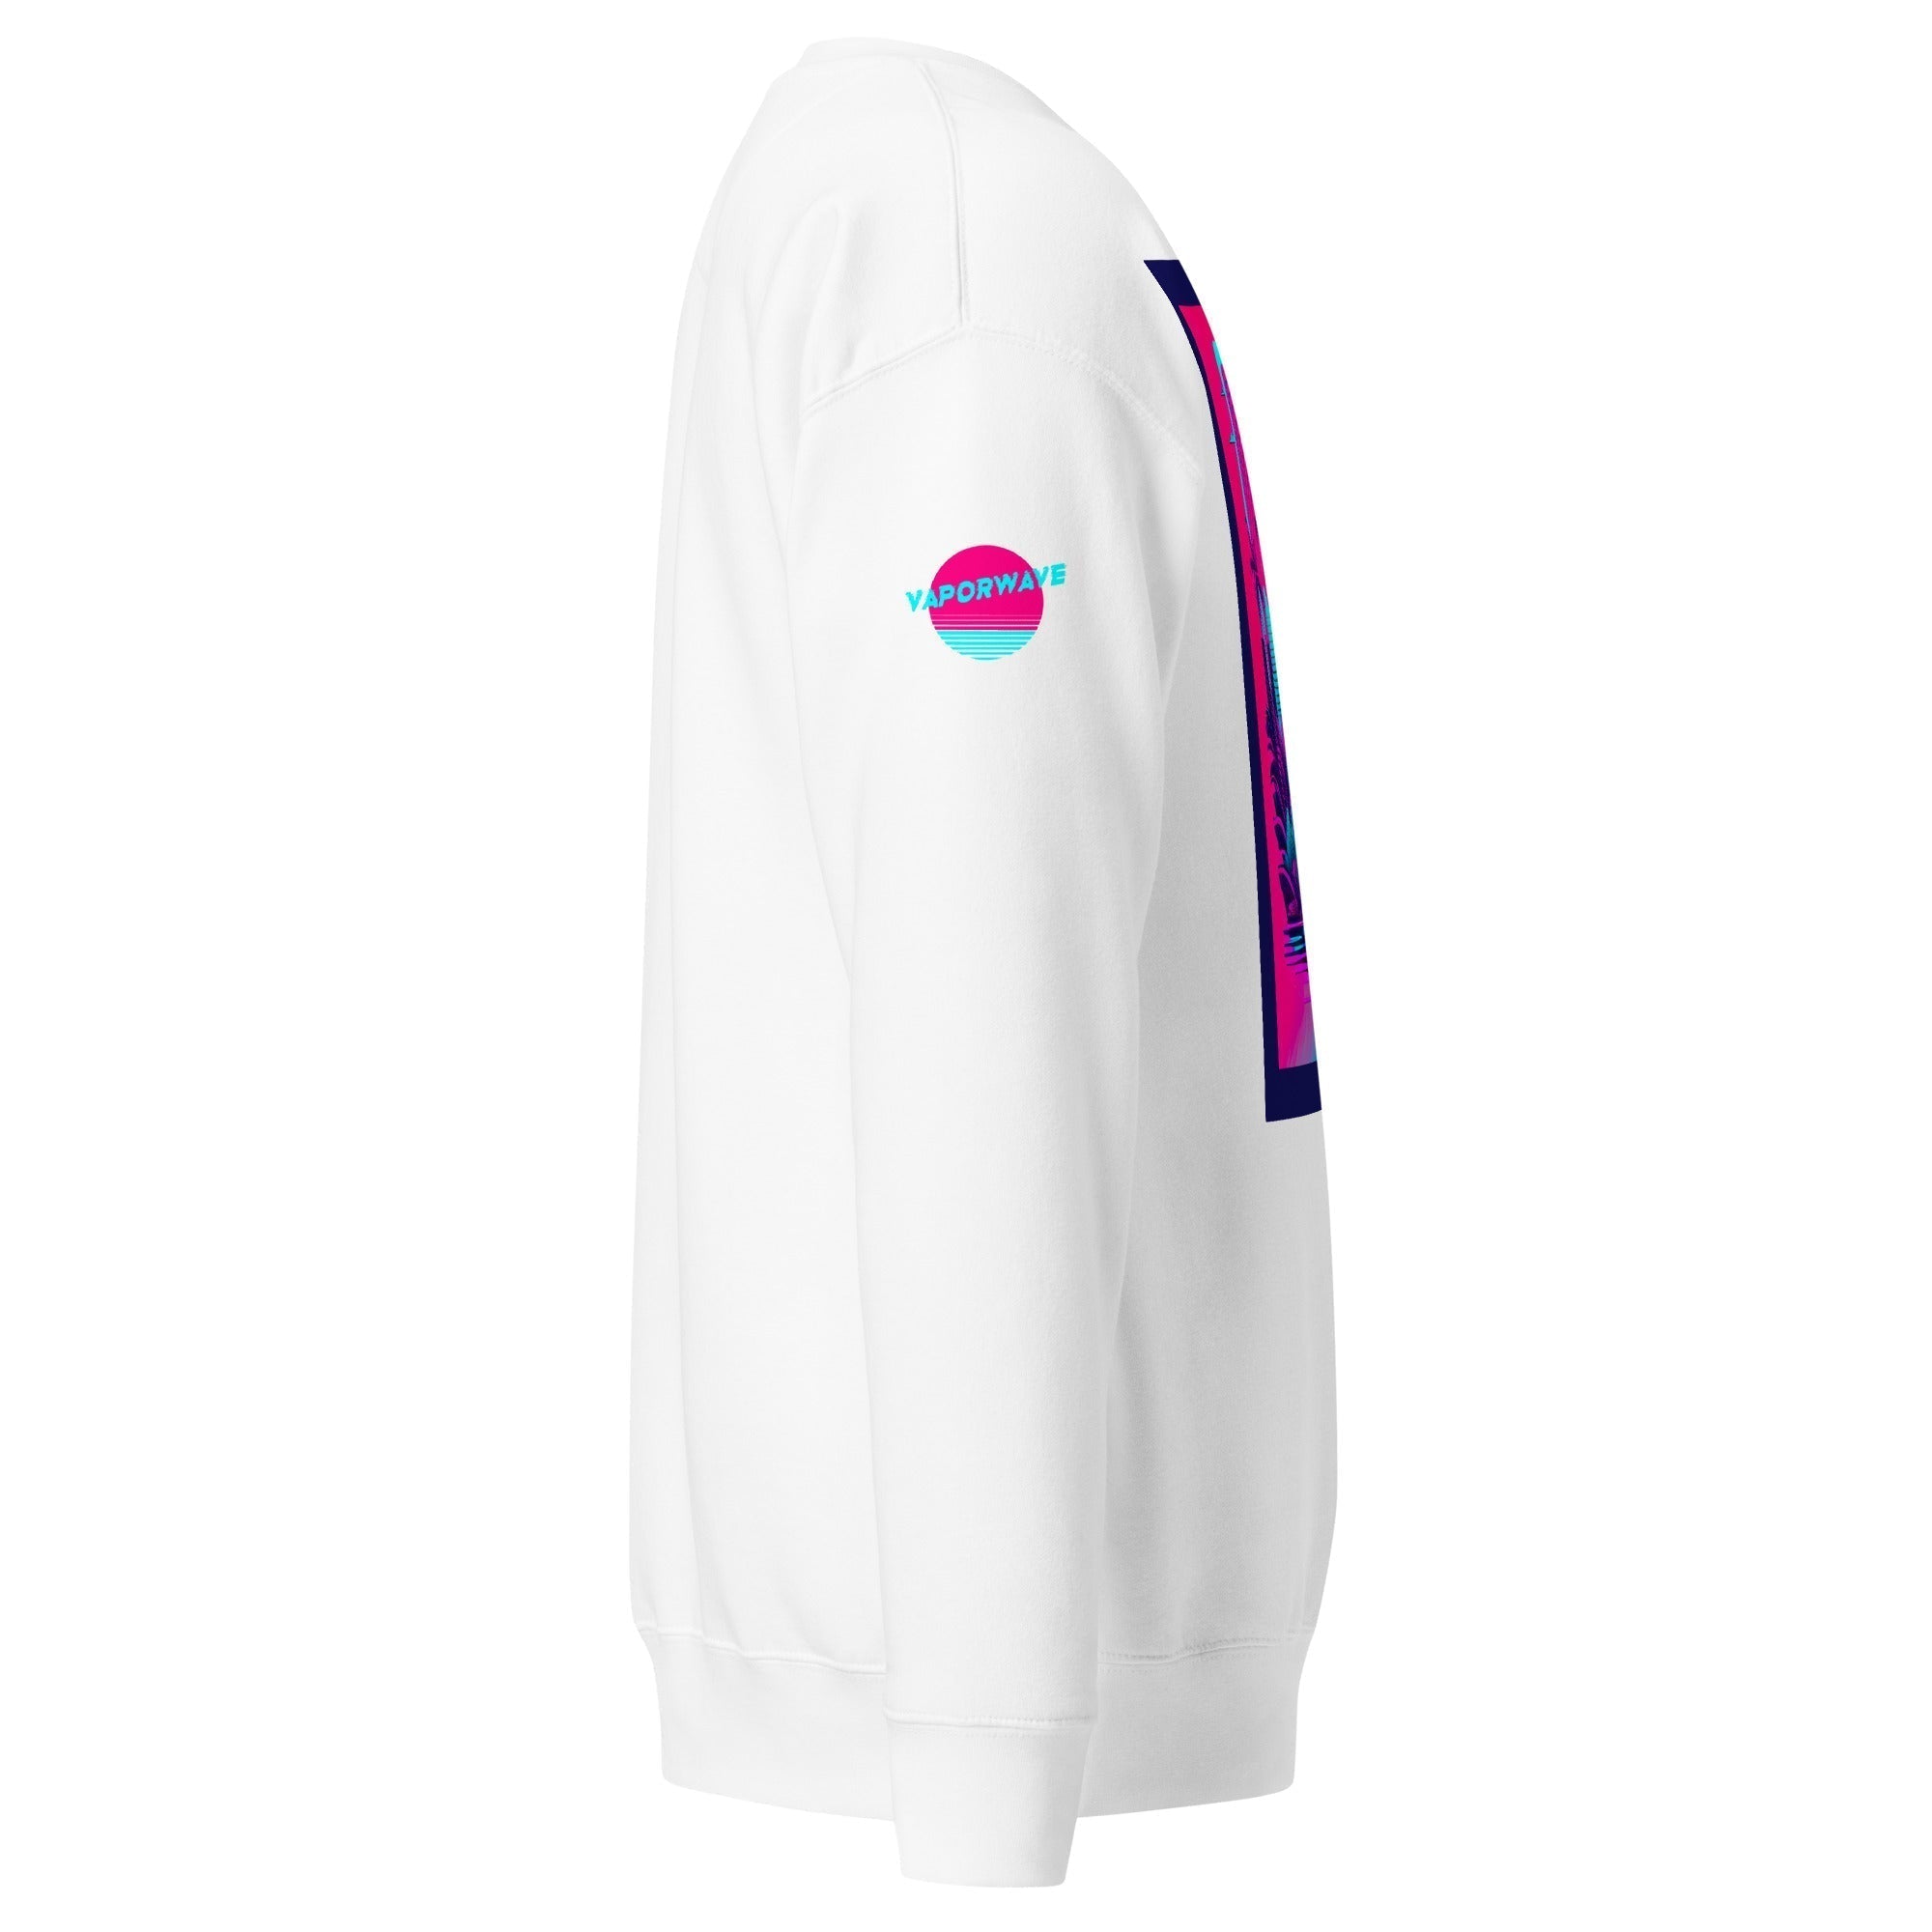 Unisex Premium Sweatshirt - Vaporwave Series v.2 - GRAPHIC T-SHIRTS